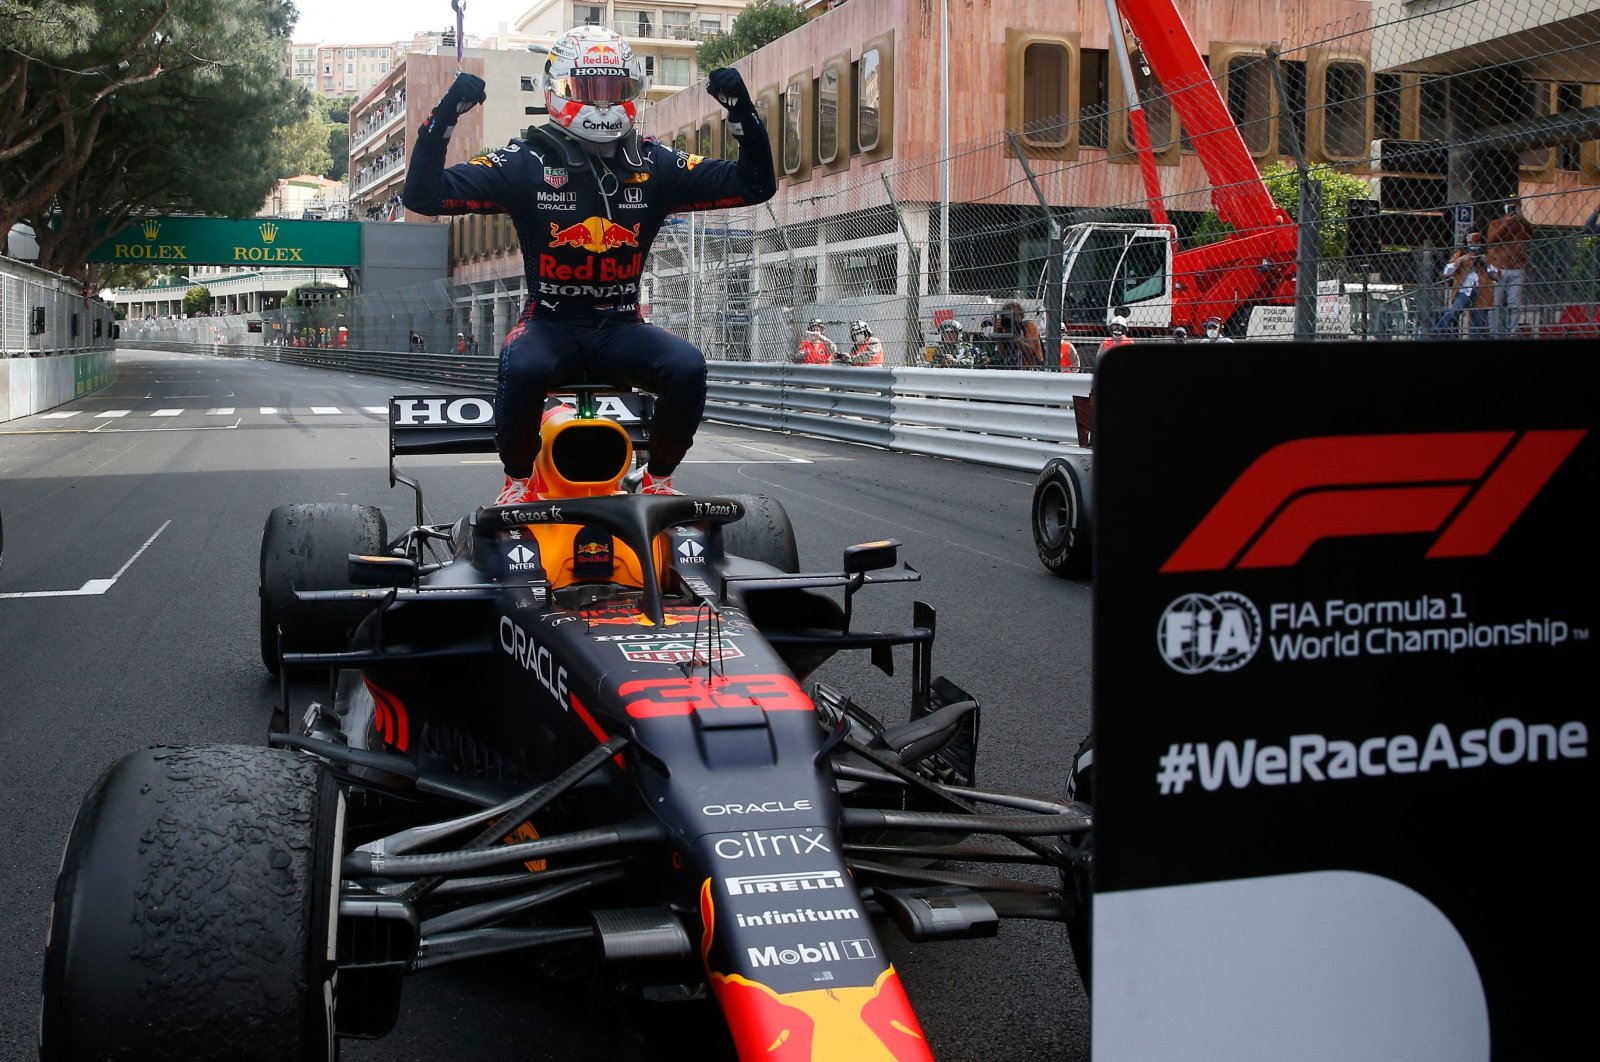 Red Bull's Dutch driver Max Verstappen celebrates winning the Monaco Formula 1 Grand Prix at the Monaco street circuit, Monaco, May 23, 2021. (AFP Photo)